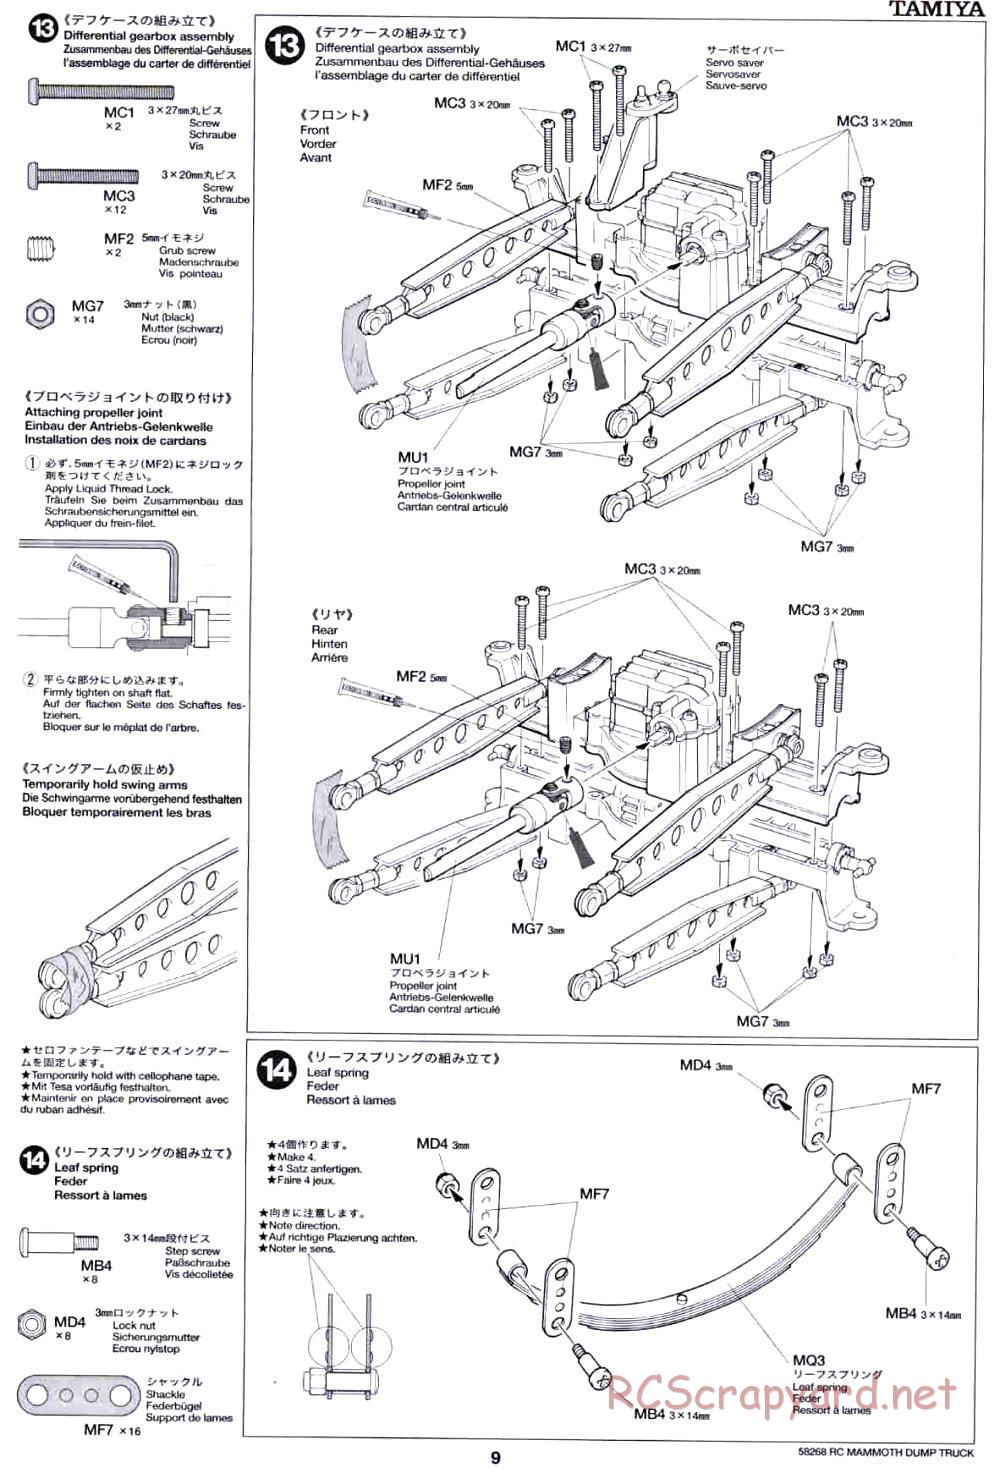 Tamiya - Mammoth Dump Truck Chassis - Manual - Page 9